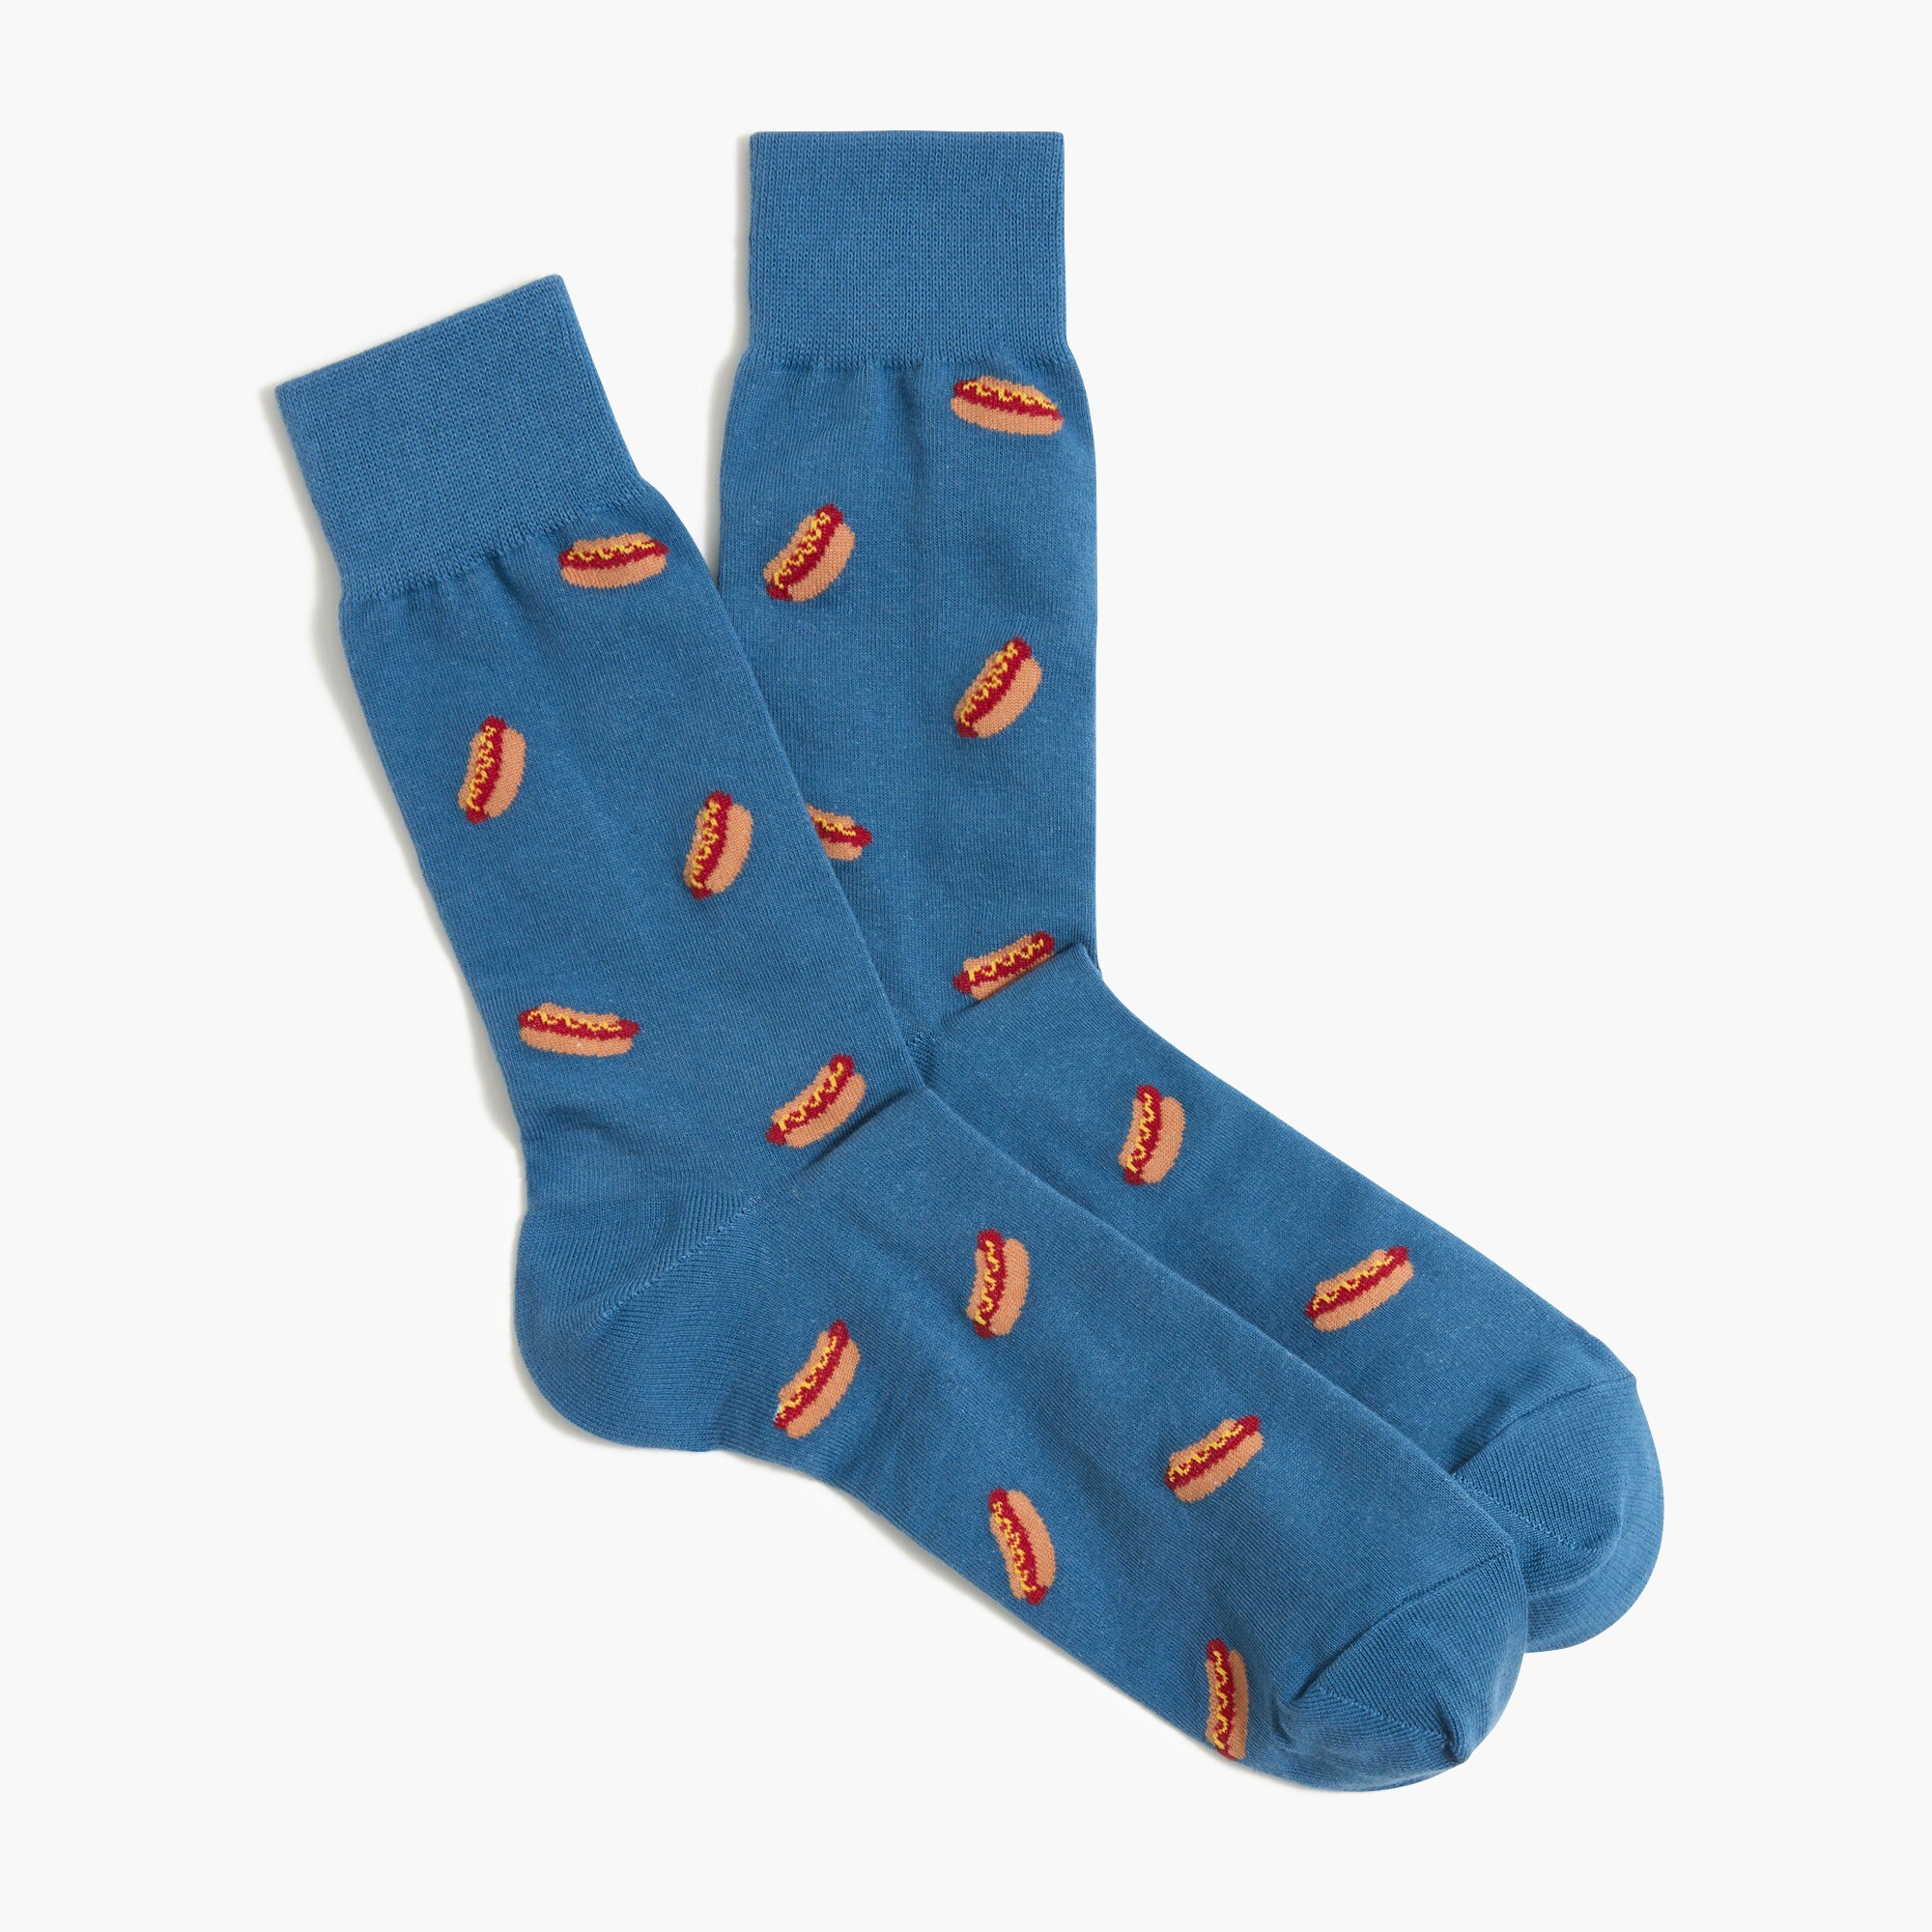  Hot dog socks